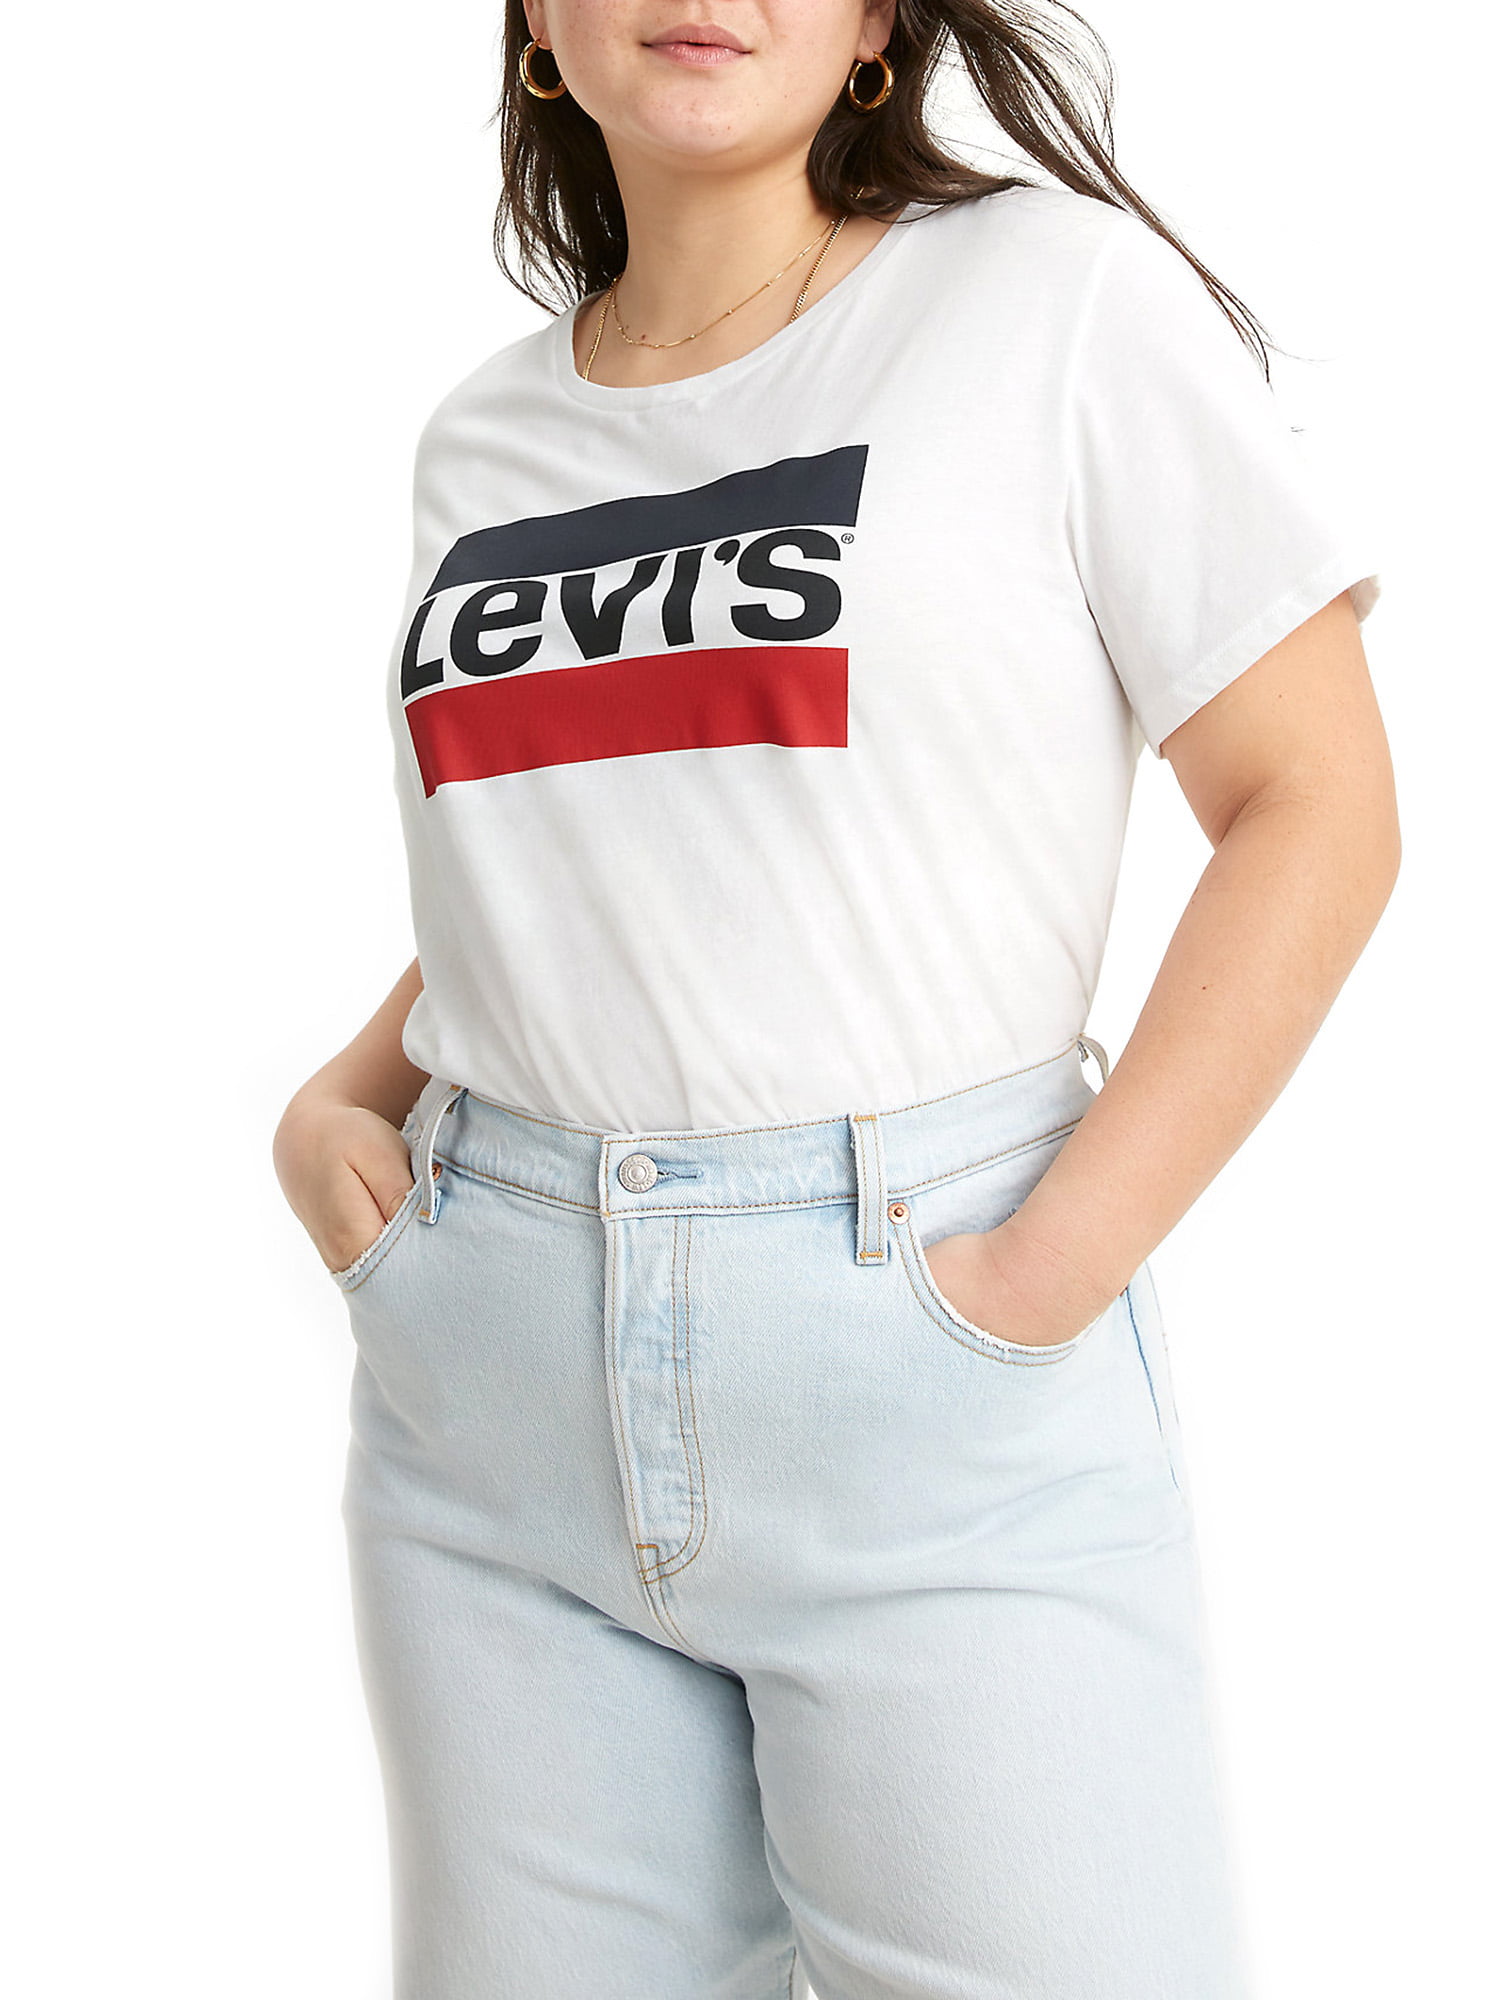 Buy Levis Women Plus Size Áo thun ngắn tay đồ họa hoàn hảo Online at Lowest  Price in Ubuy Vietnam. 462808170